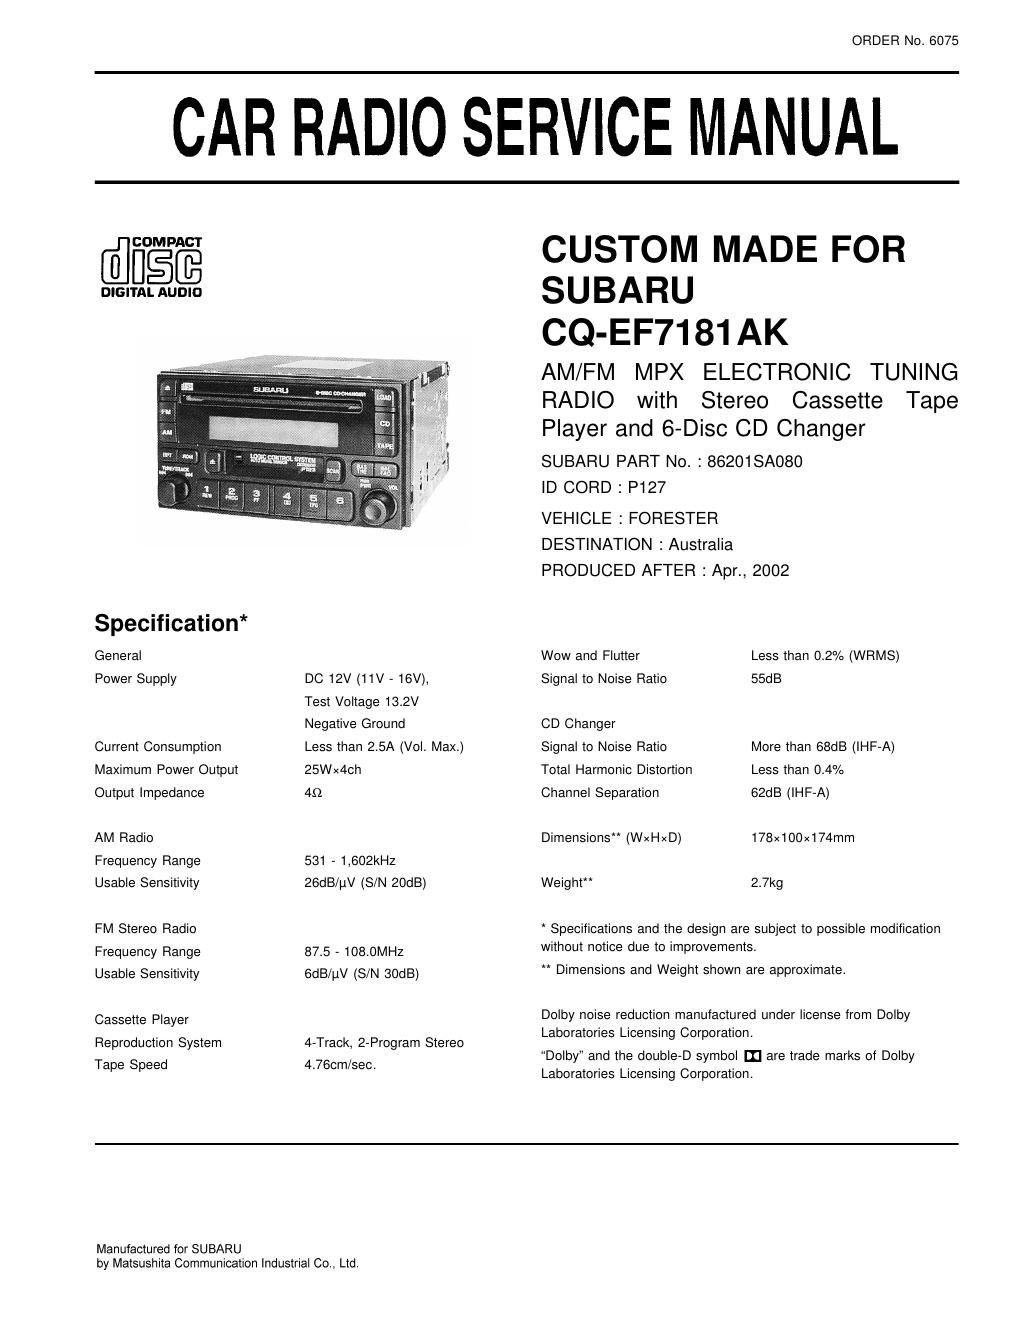 panasonic cq ef 7181 ak service manual